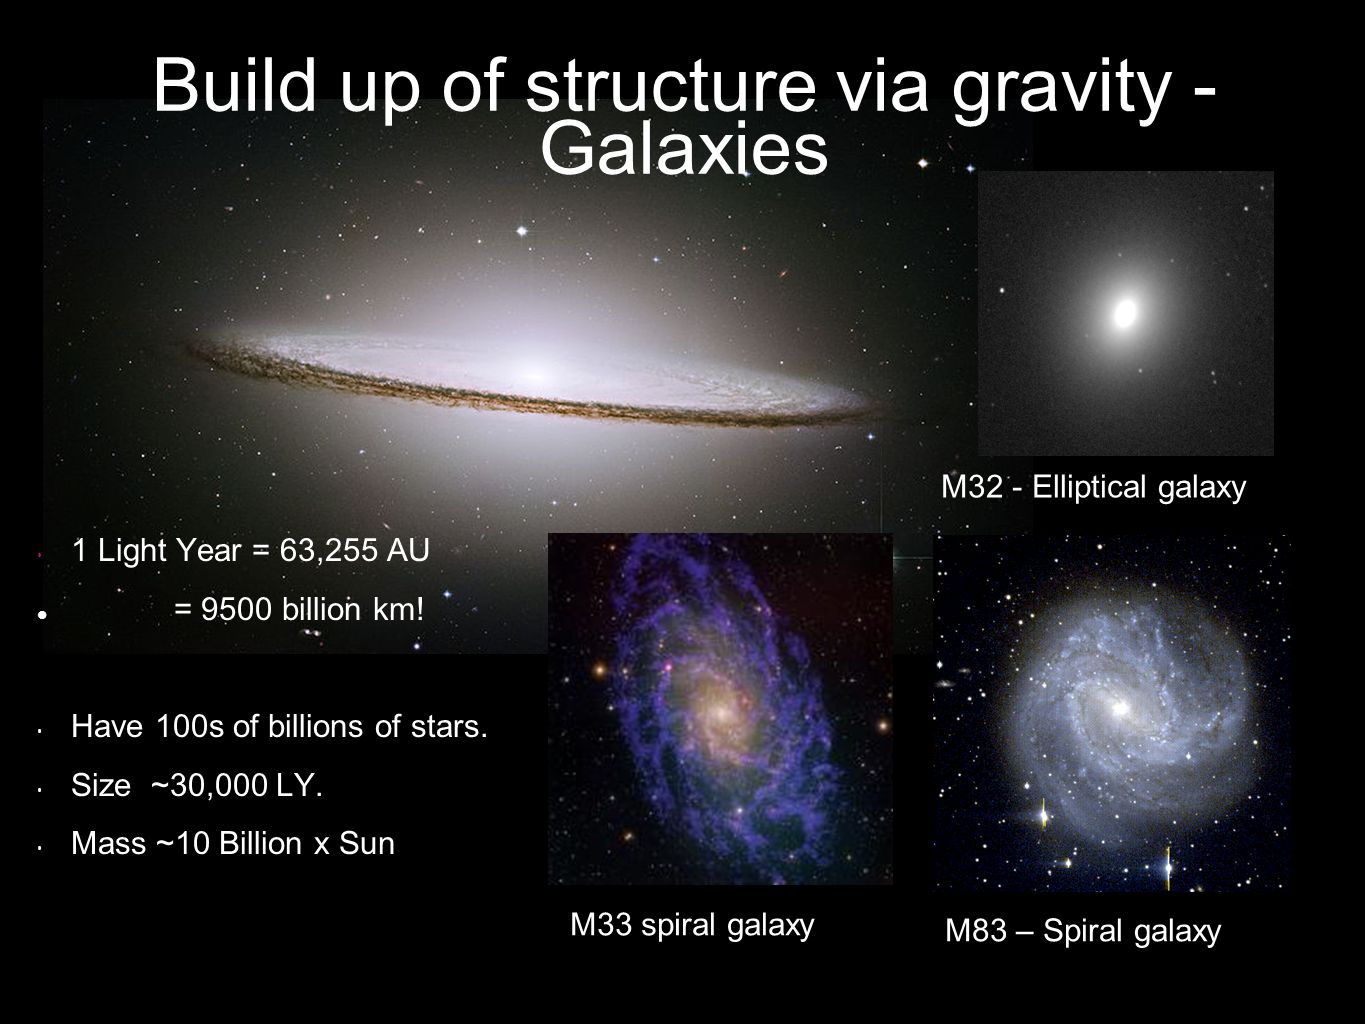 Build up of structure via gravity - Galaxies 1 Light Year = 63,255 AU = 9500 billion km.